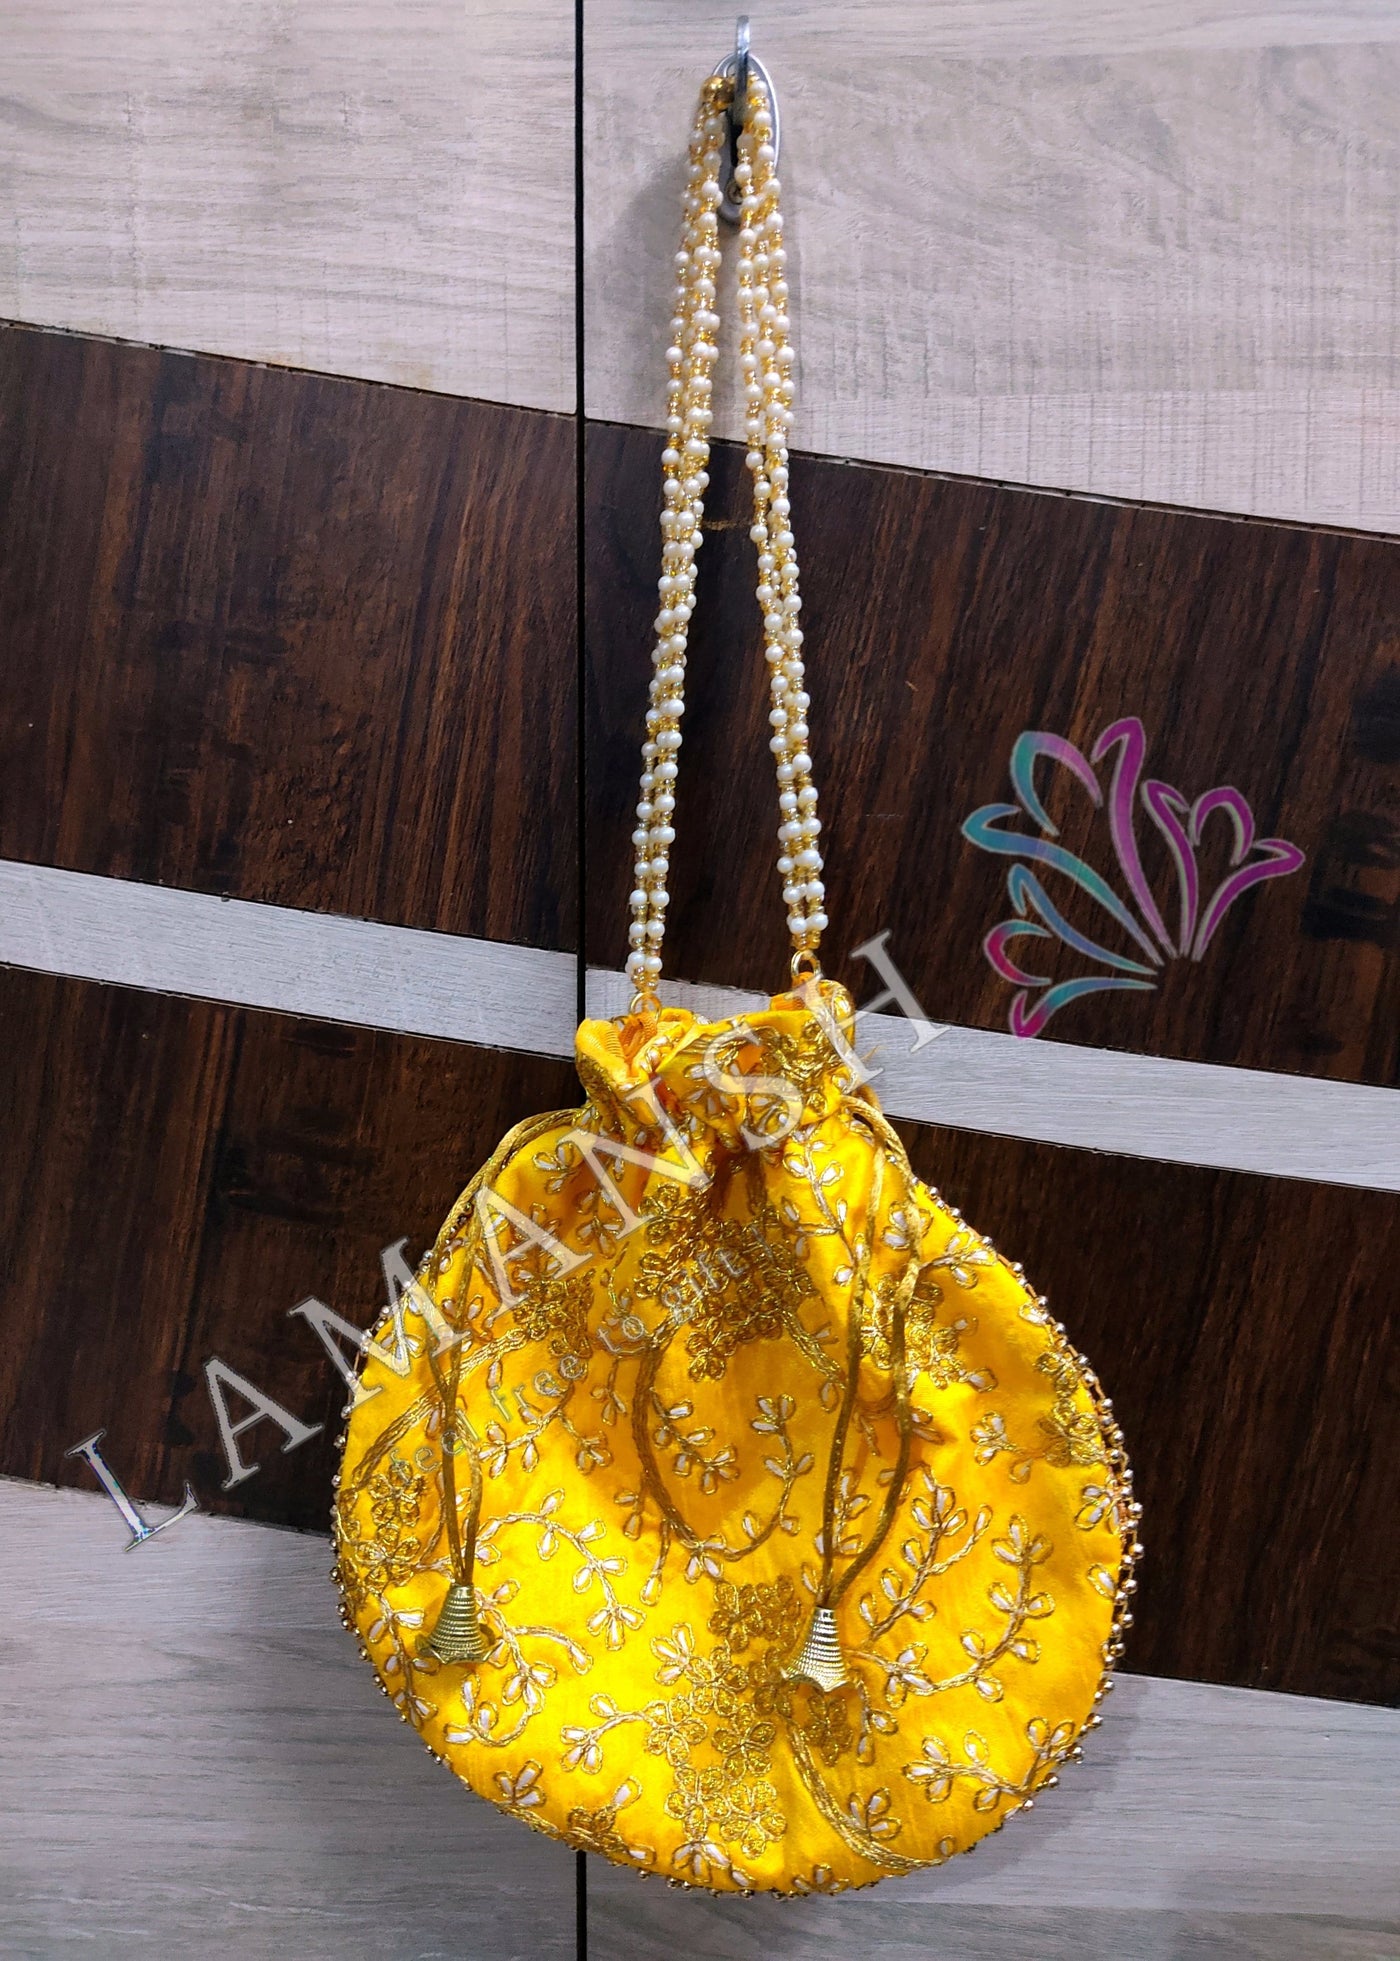 LAMANSH ® Women's Potli Bag LAMANSH Pack of 5 Potli Purse bags Giveaways for women handbags traditional Indian Wristlet with Drawstring Ethnic Embroidery Women Fashion Potli